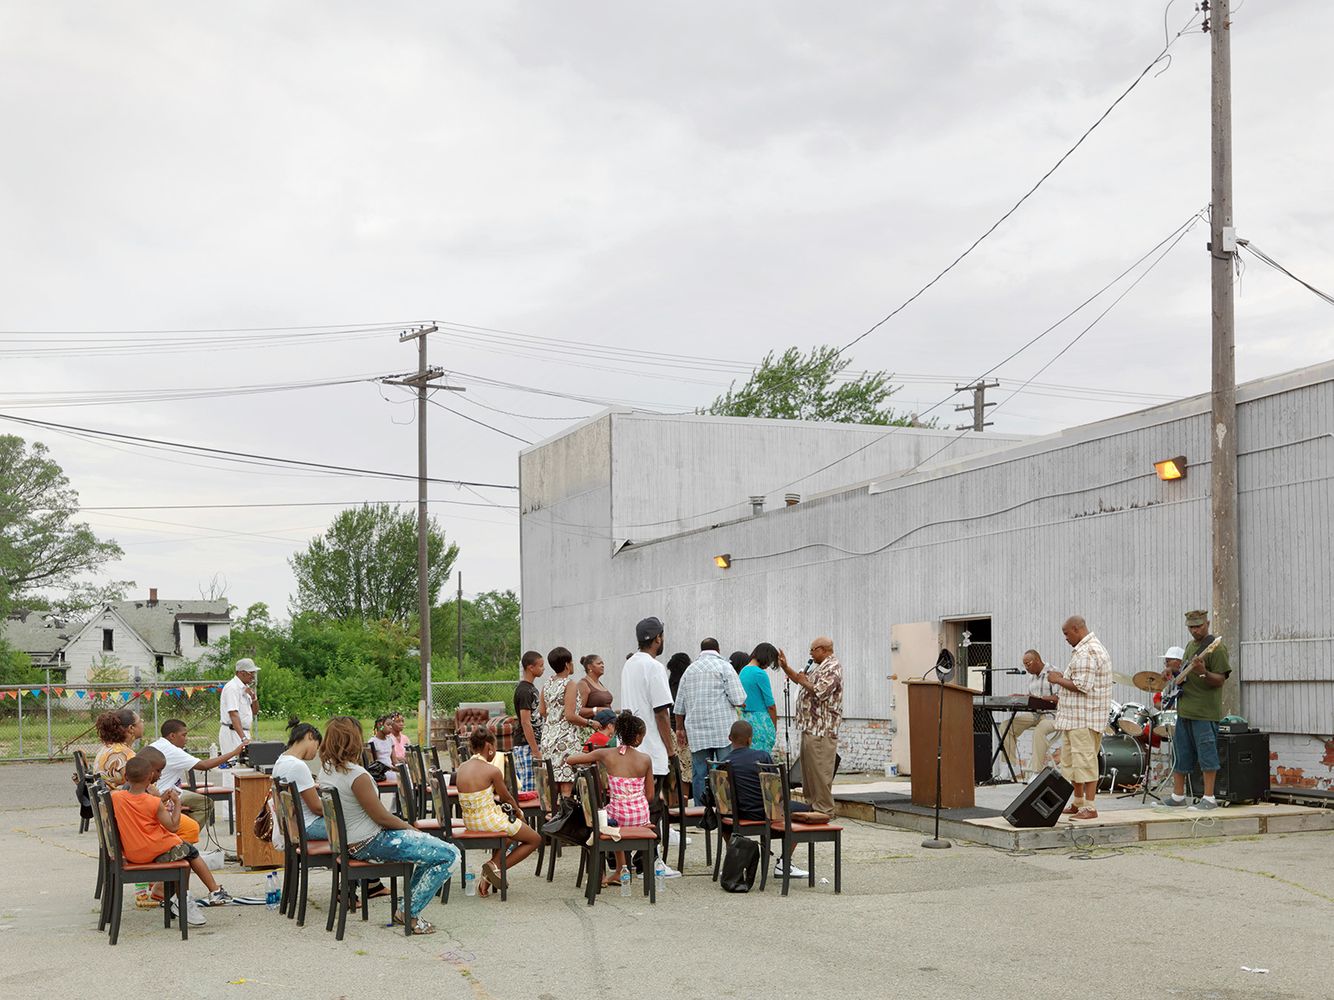 Outdoor Church Service, Eastside, Detroit 2010